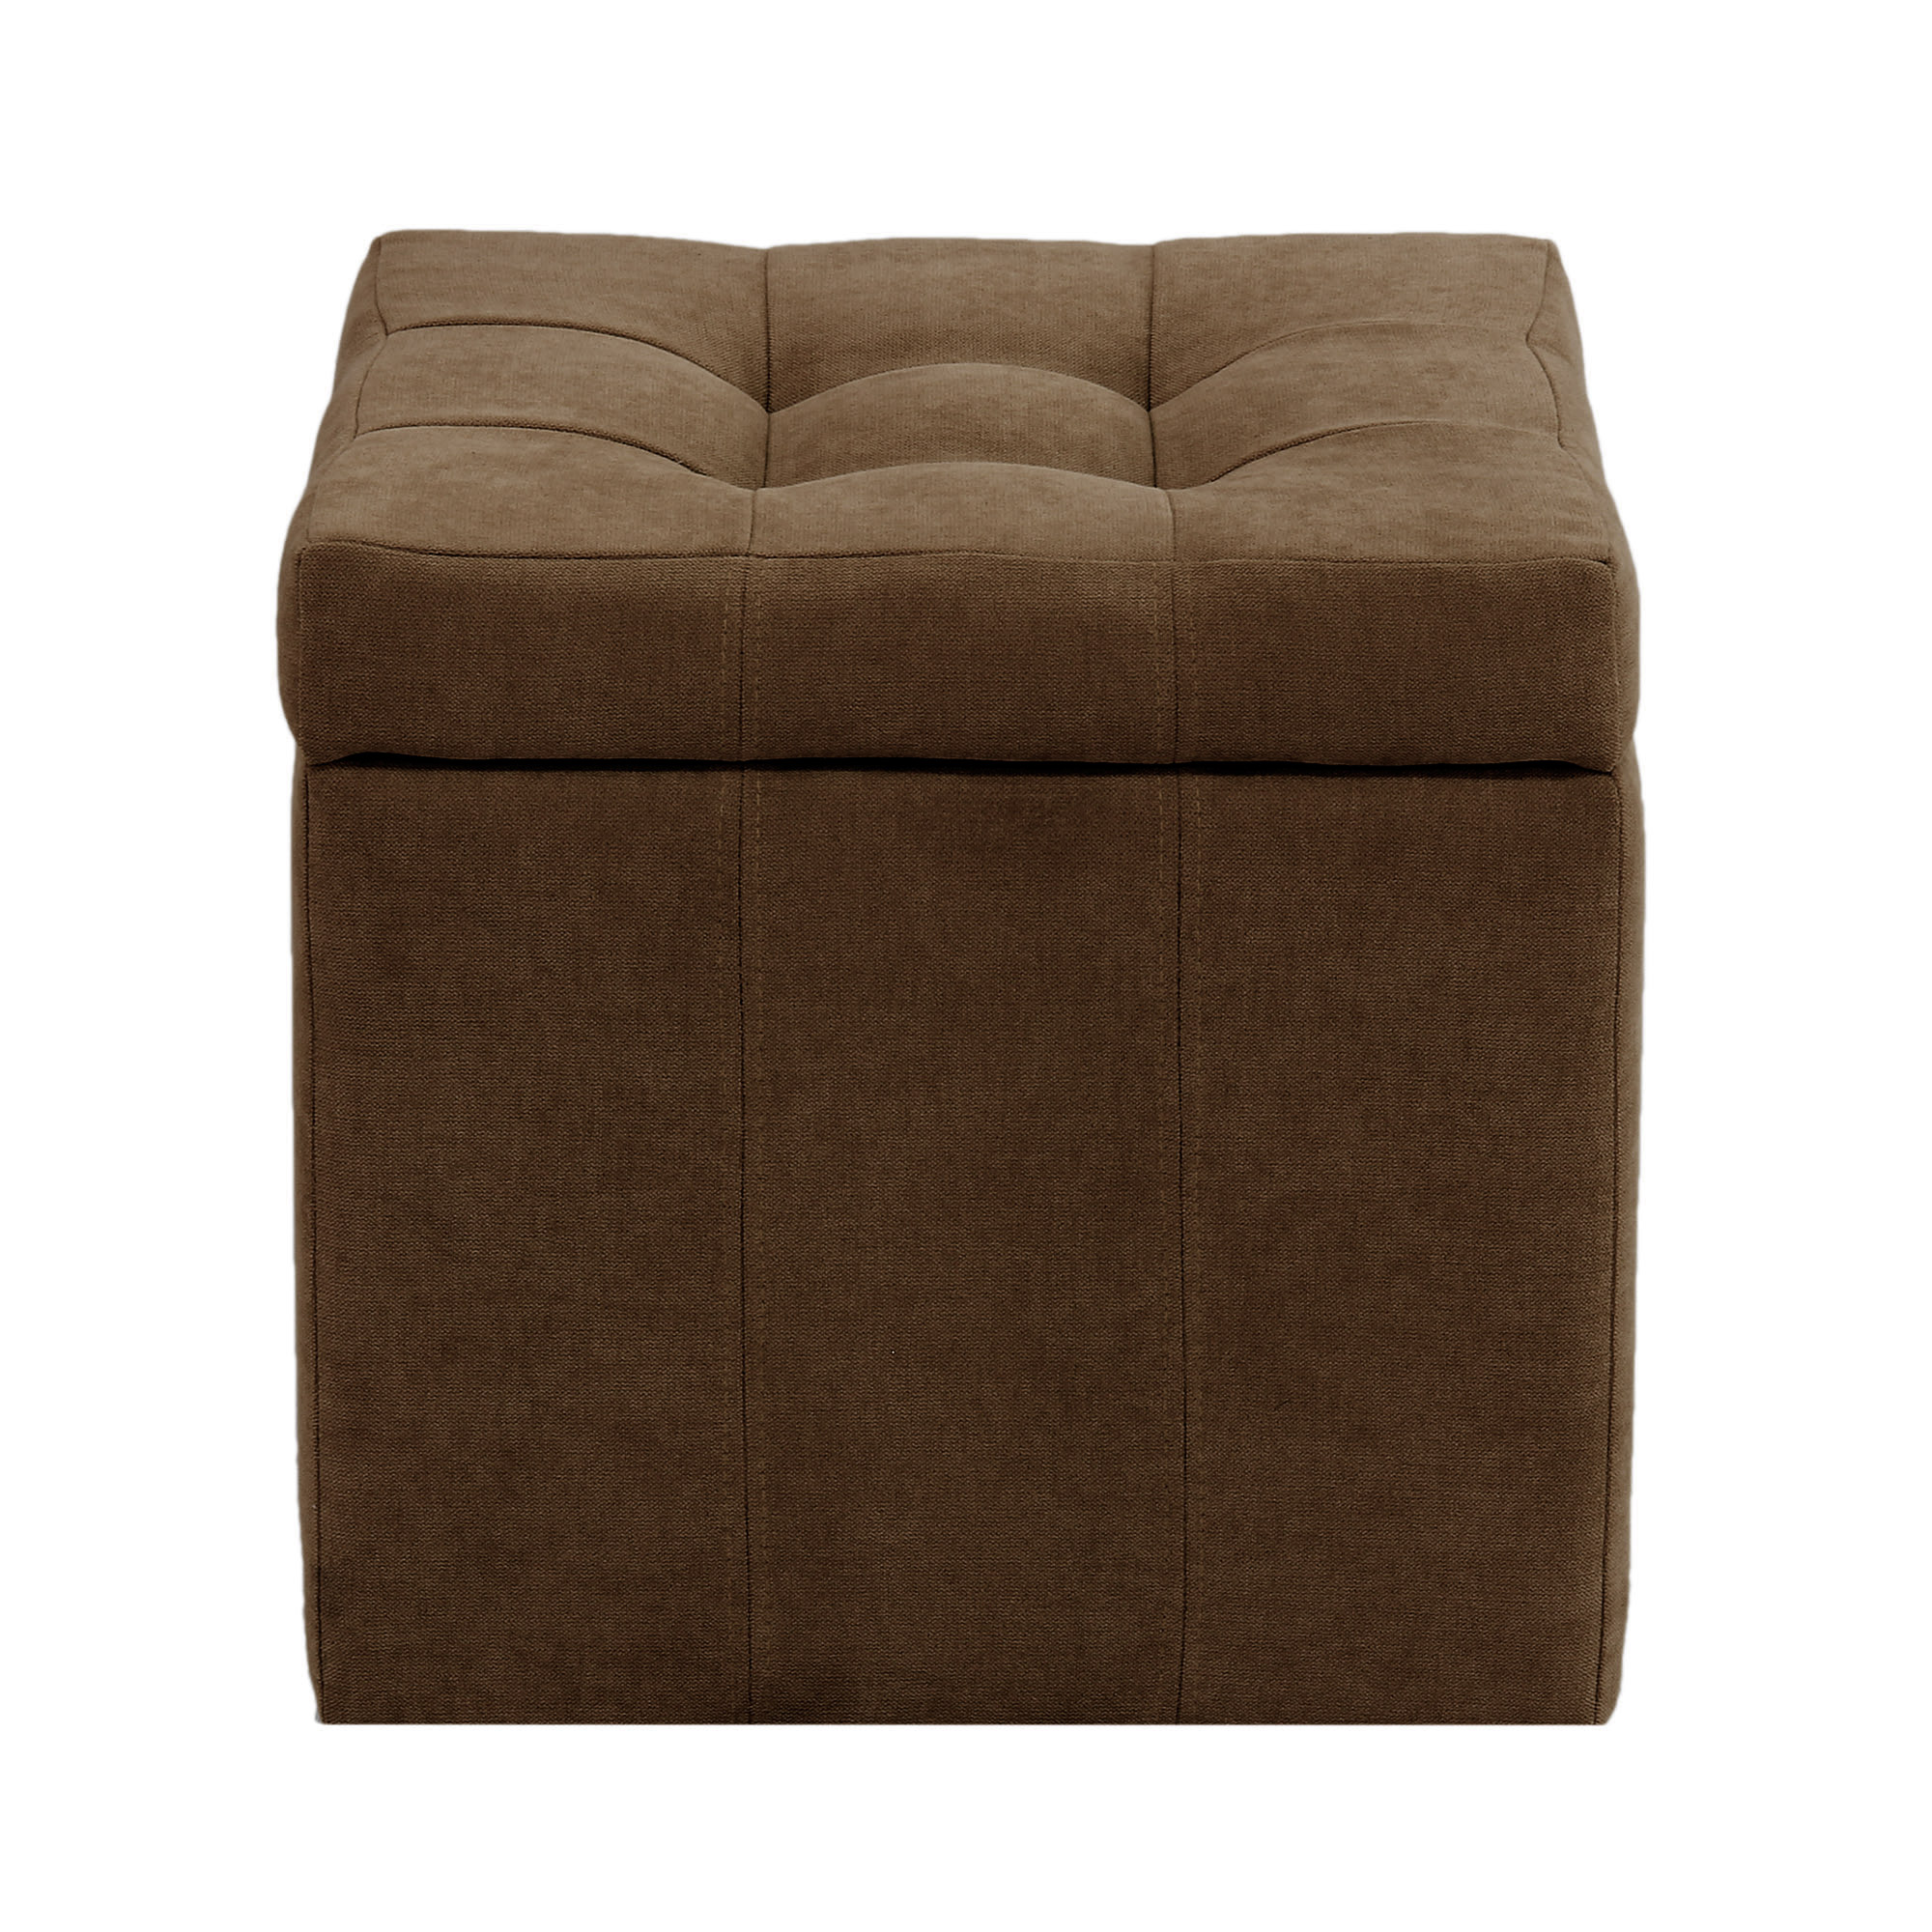 Банкетка Dreambag модерна коричневый велюр 46х46х46 см, размер 46х46х46 см - фото 2